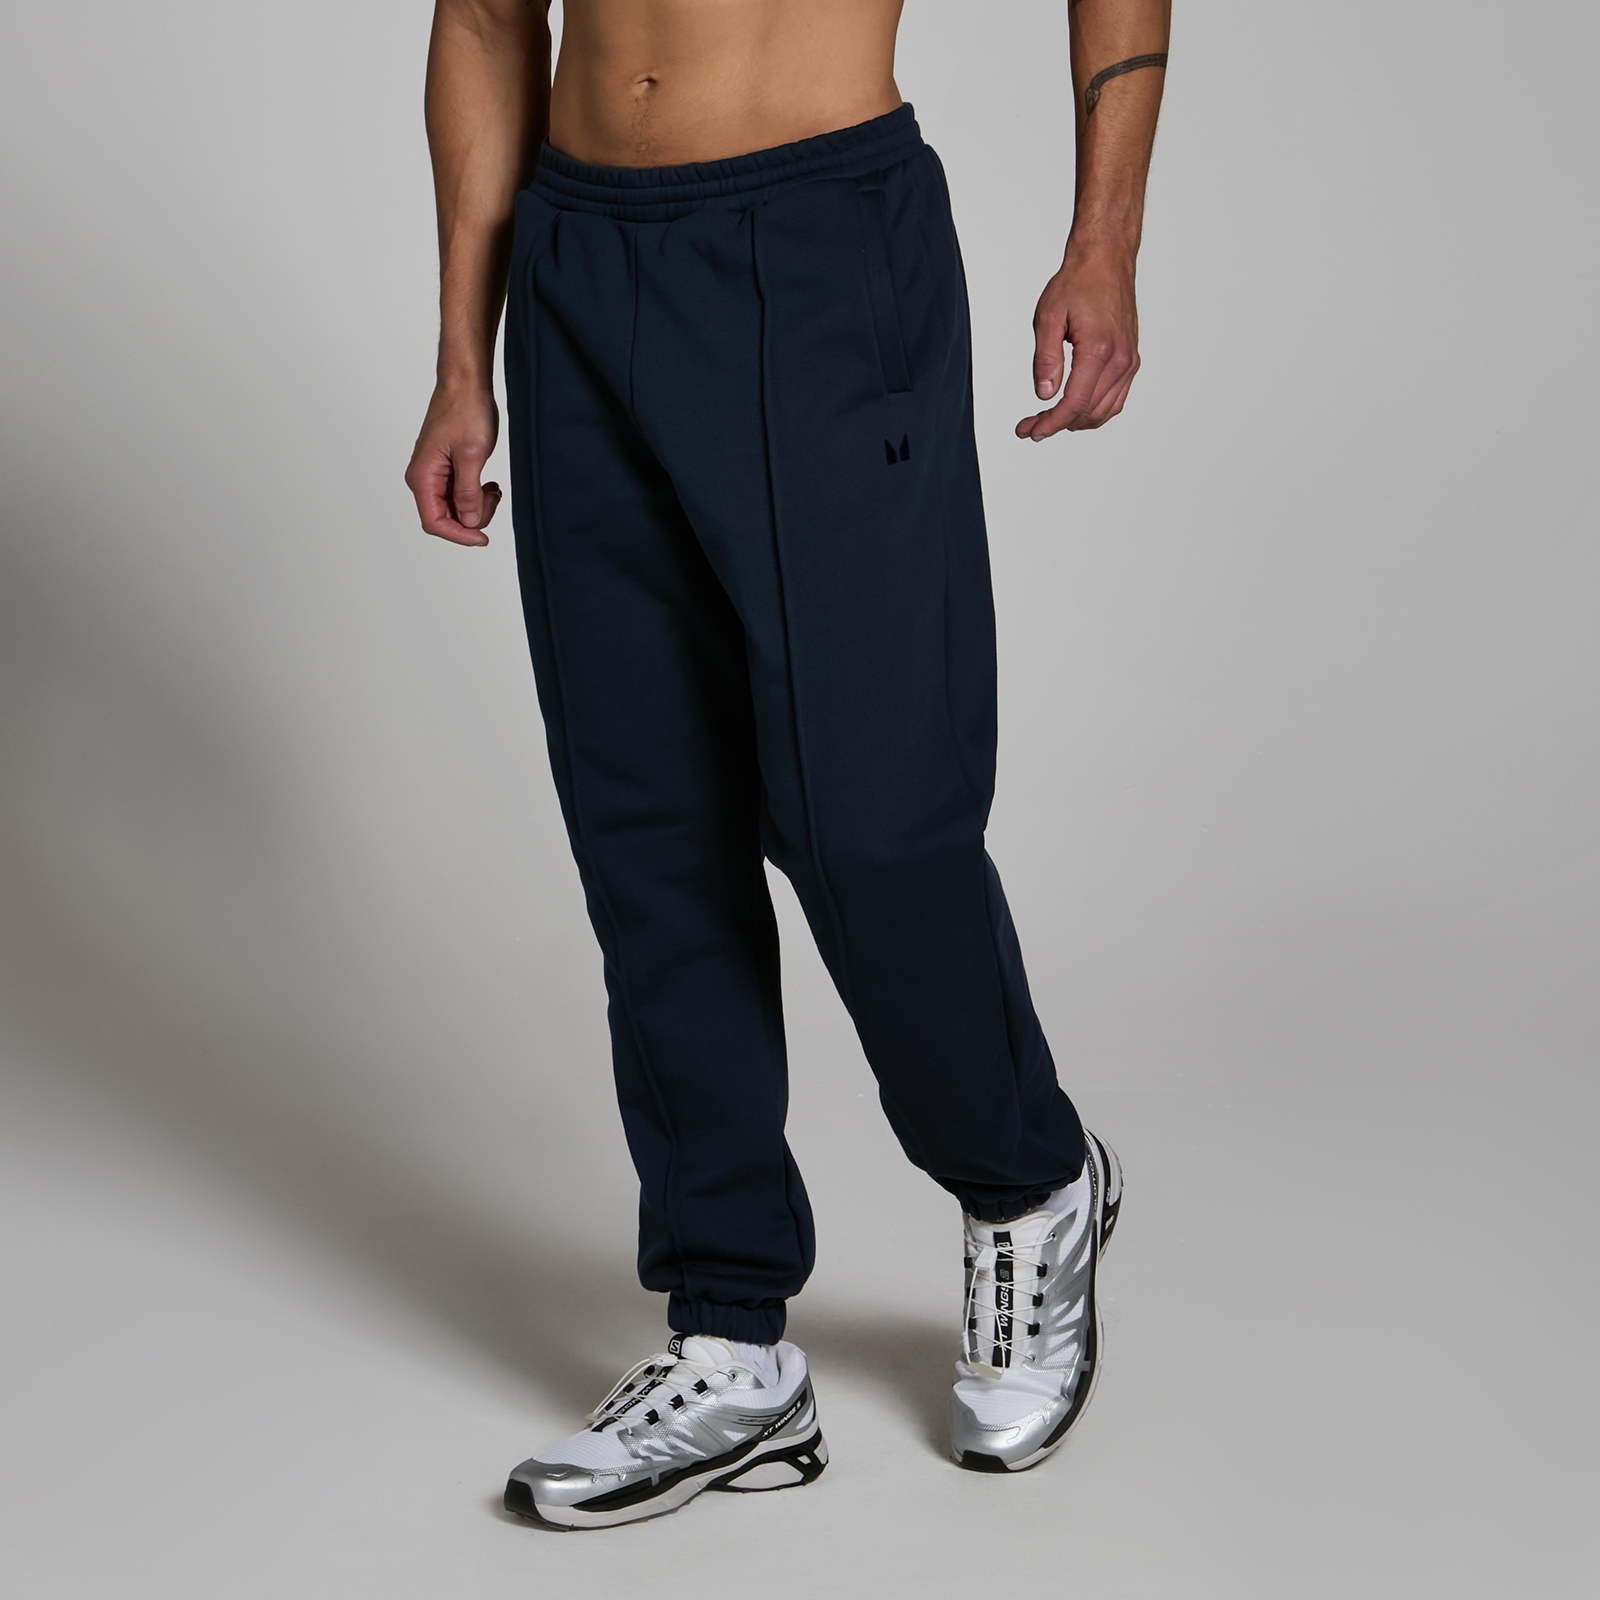 Image of Pantaloni da jogging pesanti oversize MP Lifestyle da uomo - Blu navy scuro - XL